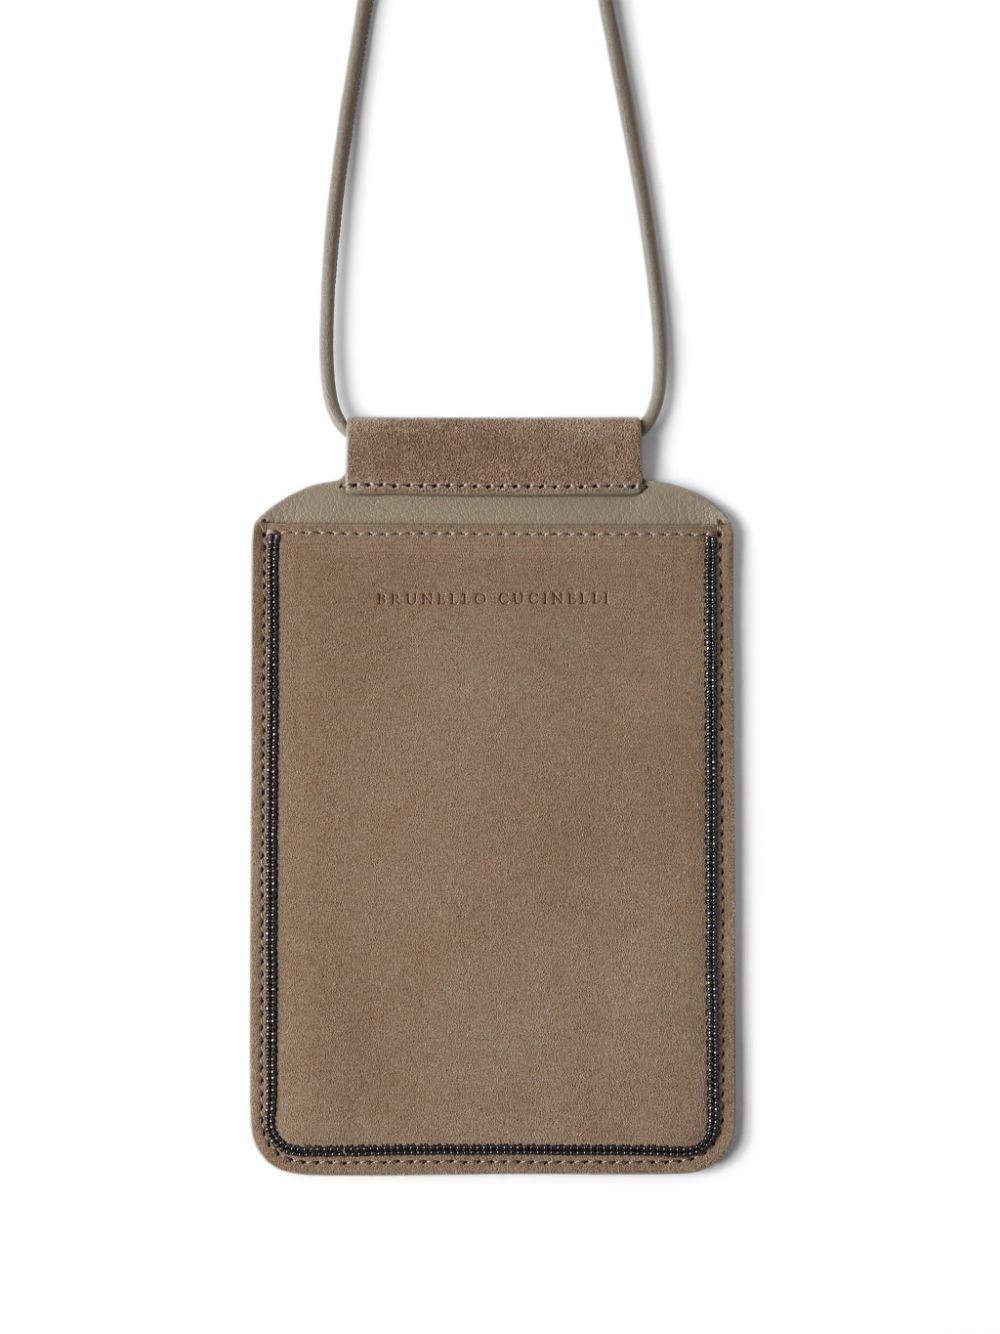 Brunello Cucinelli logo-debossed leather case | REVERSIBLE